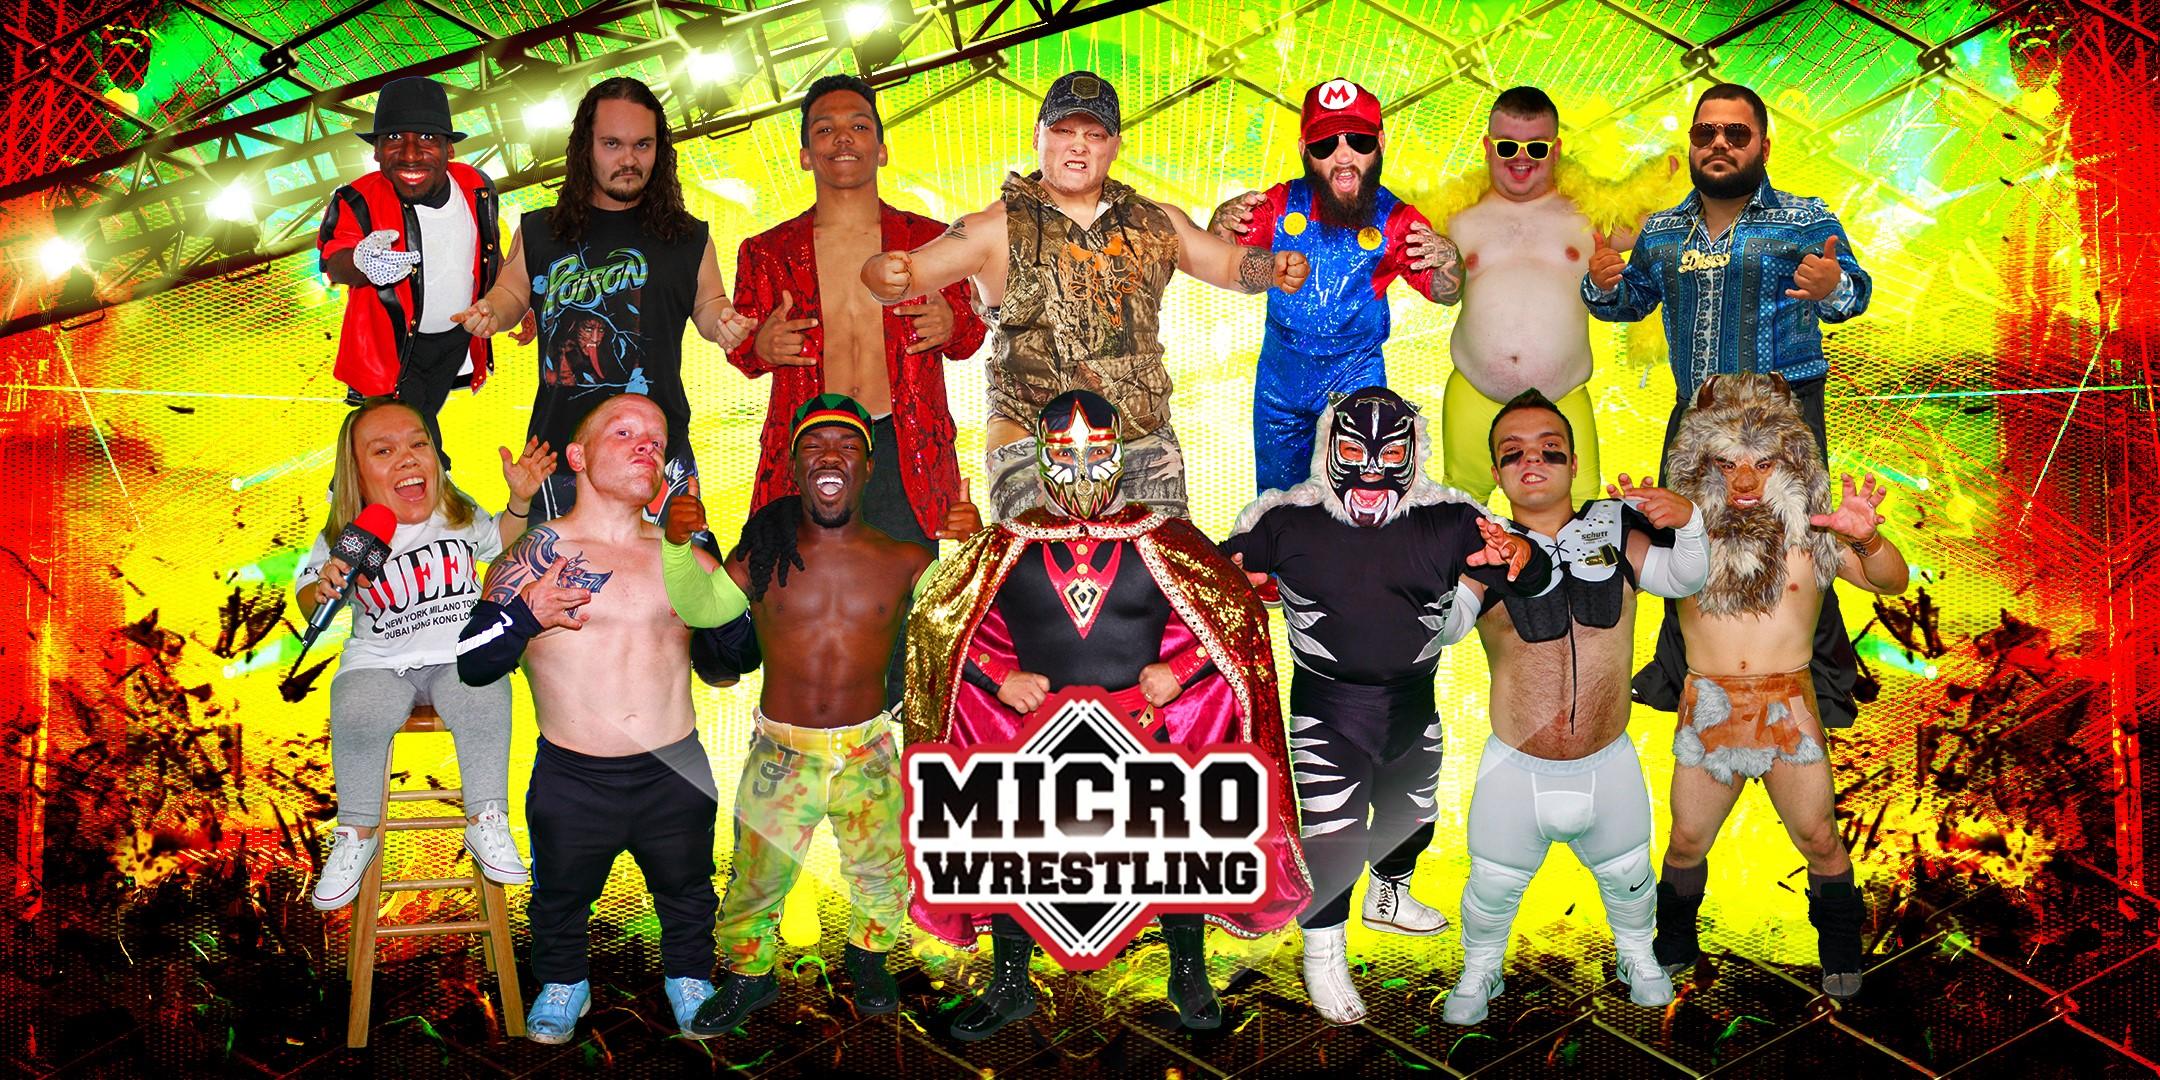 21 & Up Micro Wrestling at The Windbreak!